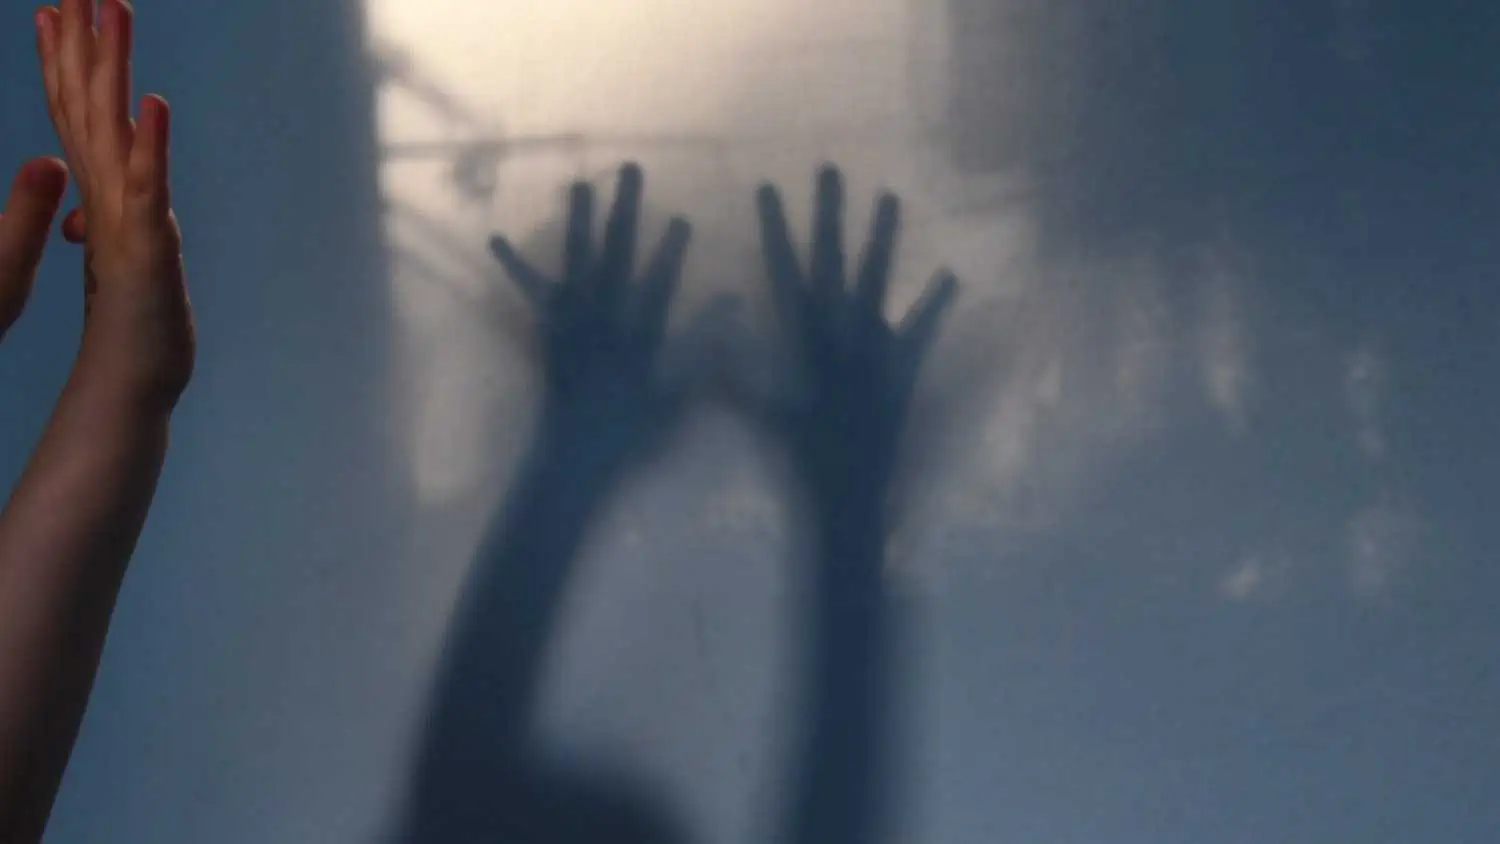 Scary hand shadows